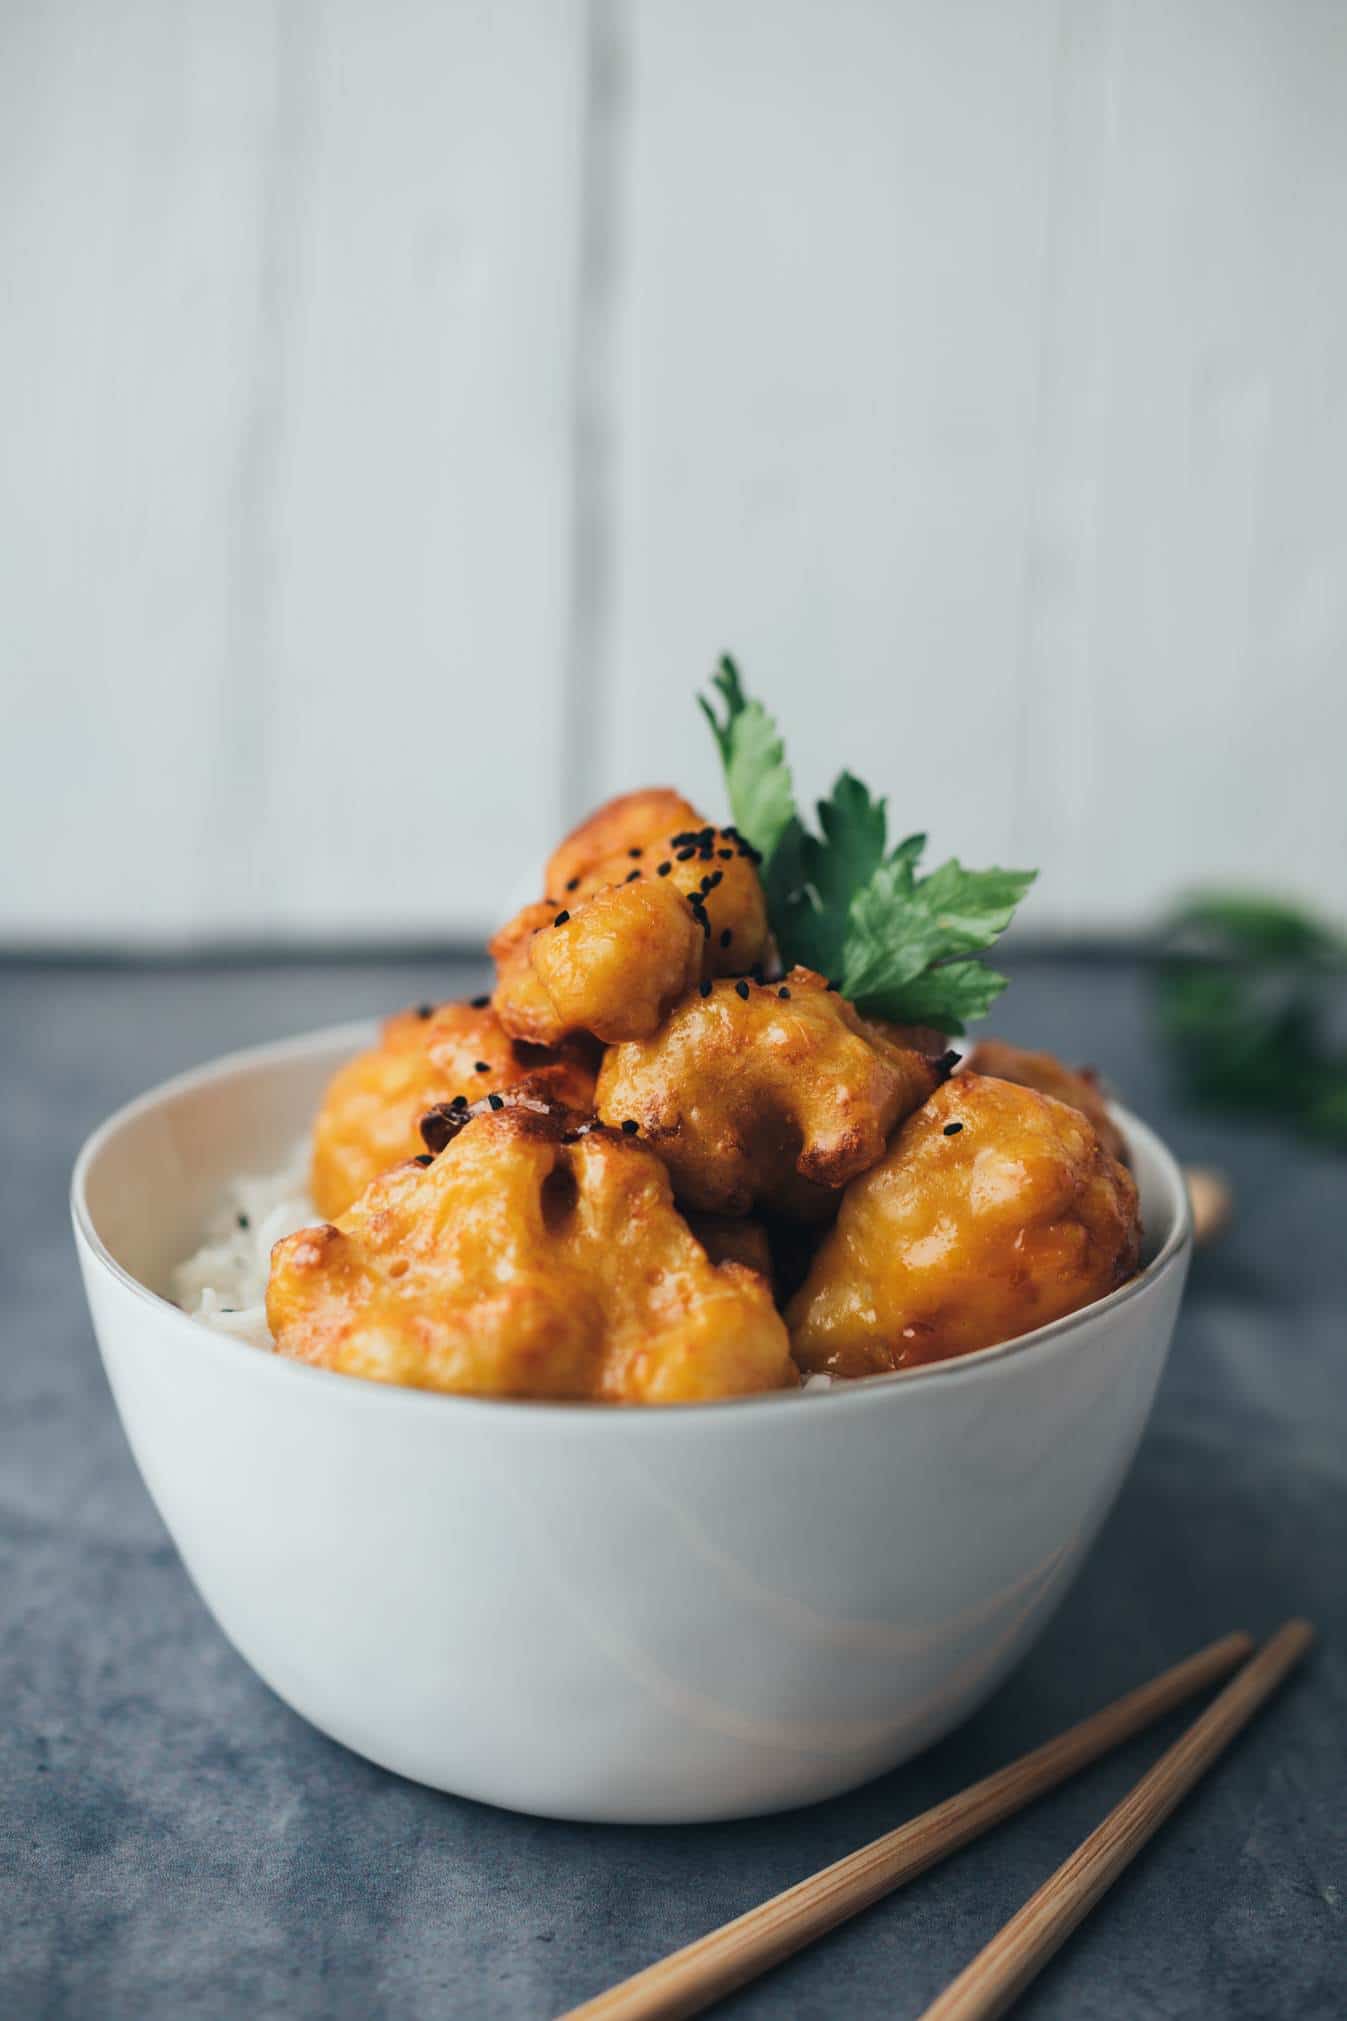 vegan sticky sesame chicken wings from cauliflower recipe